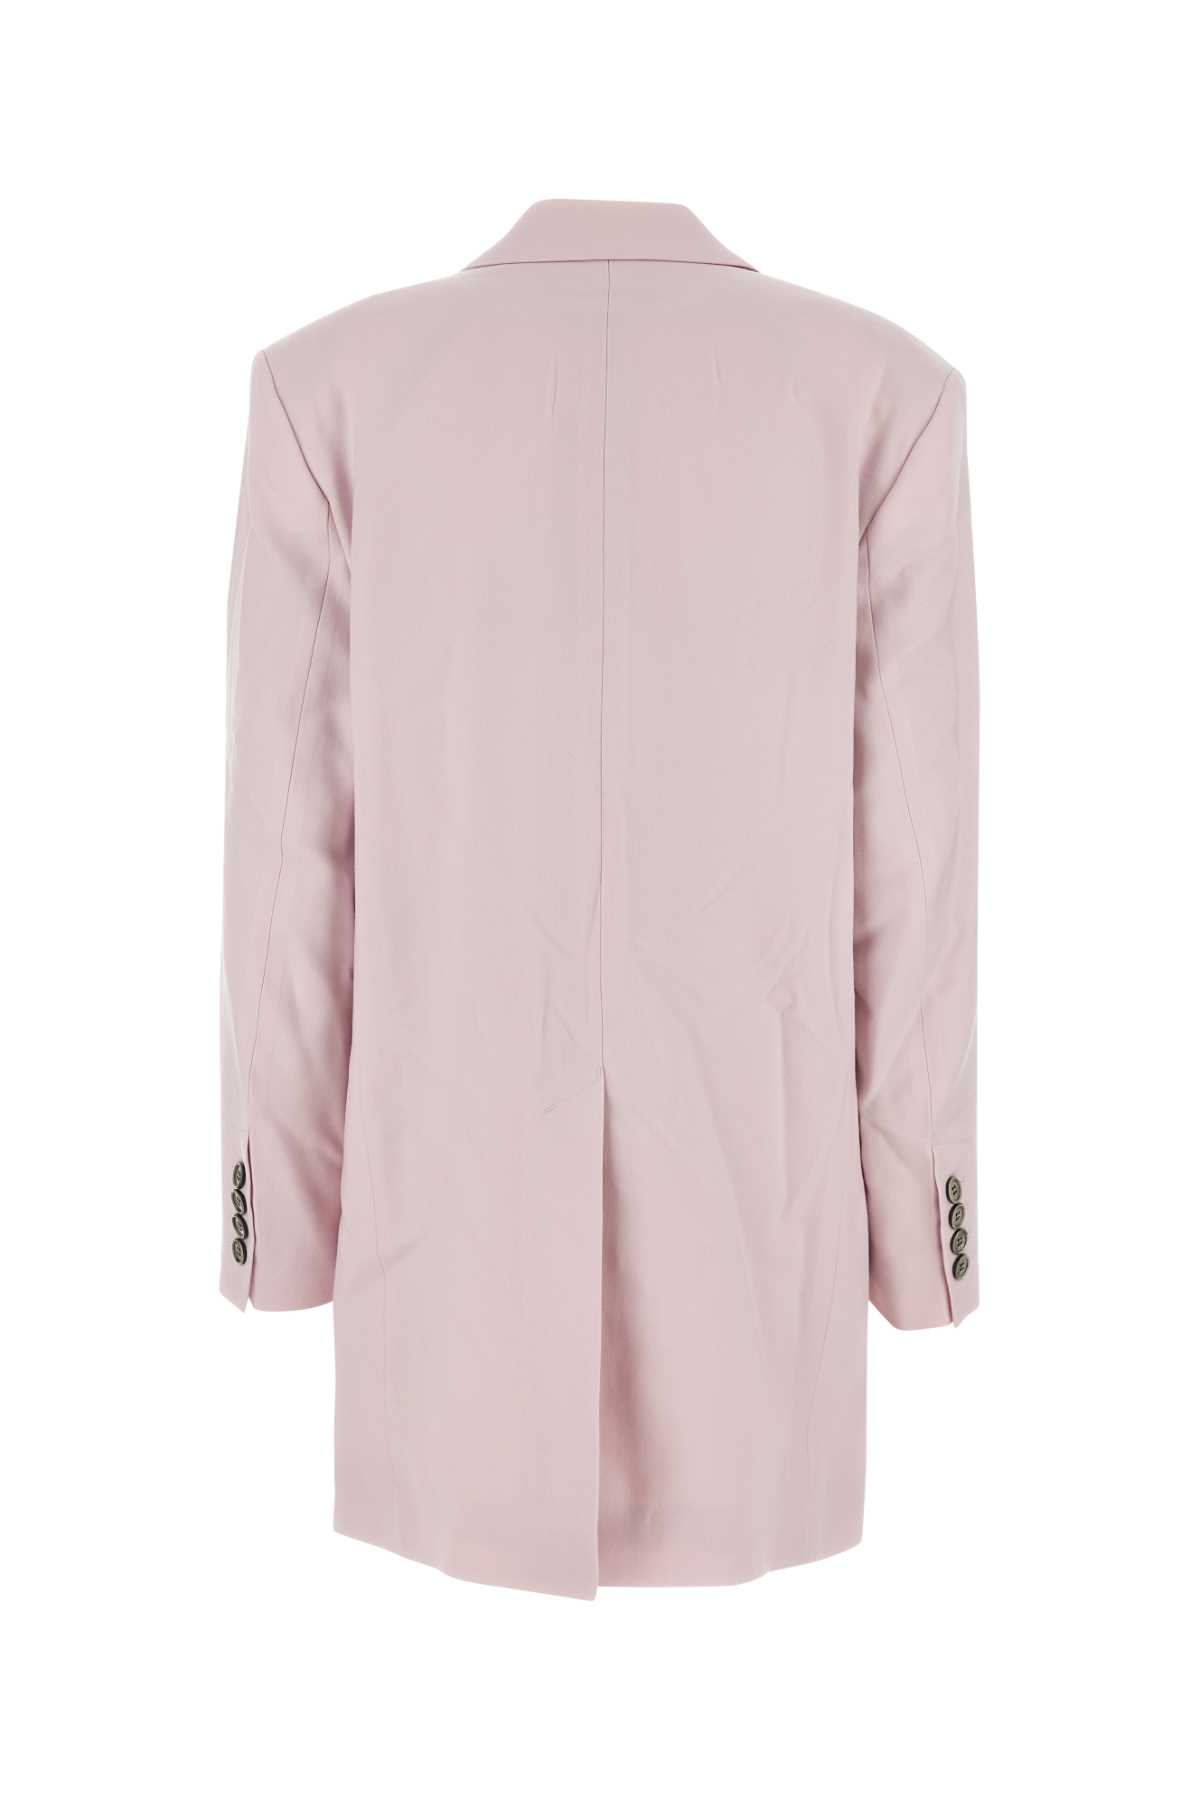 Ami Alexandre Mattiussi Light Pink Wool Oversize Blazer In Powderpink